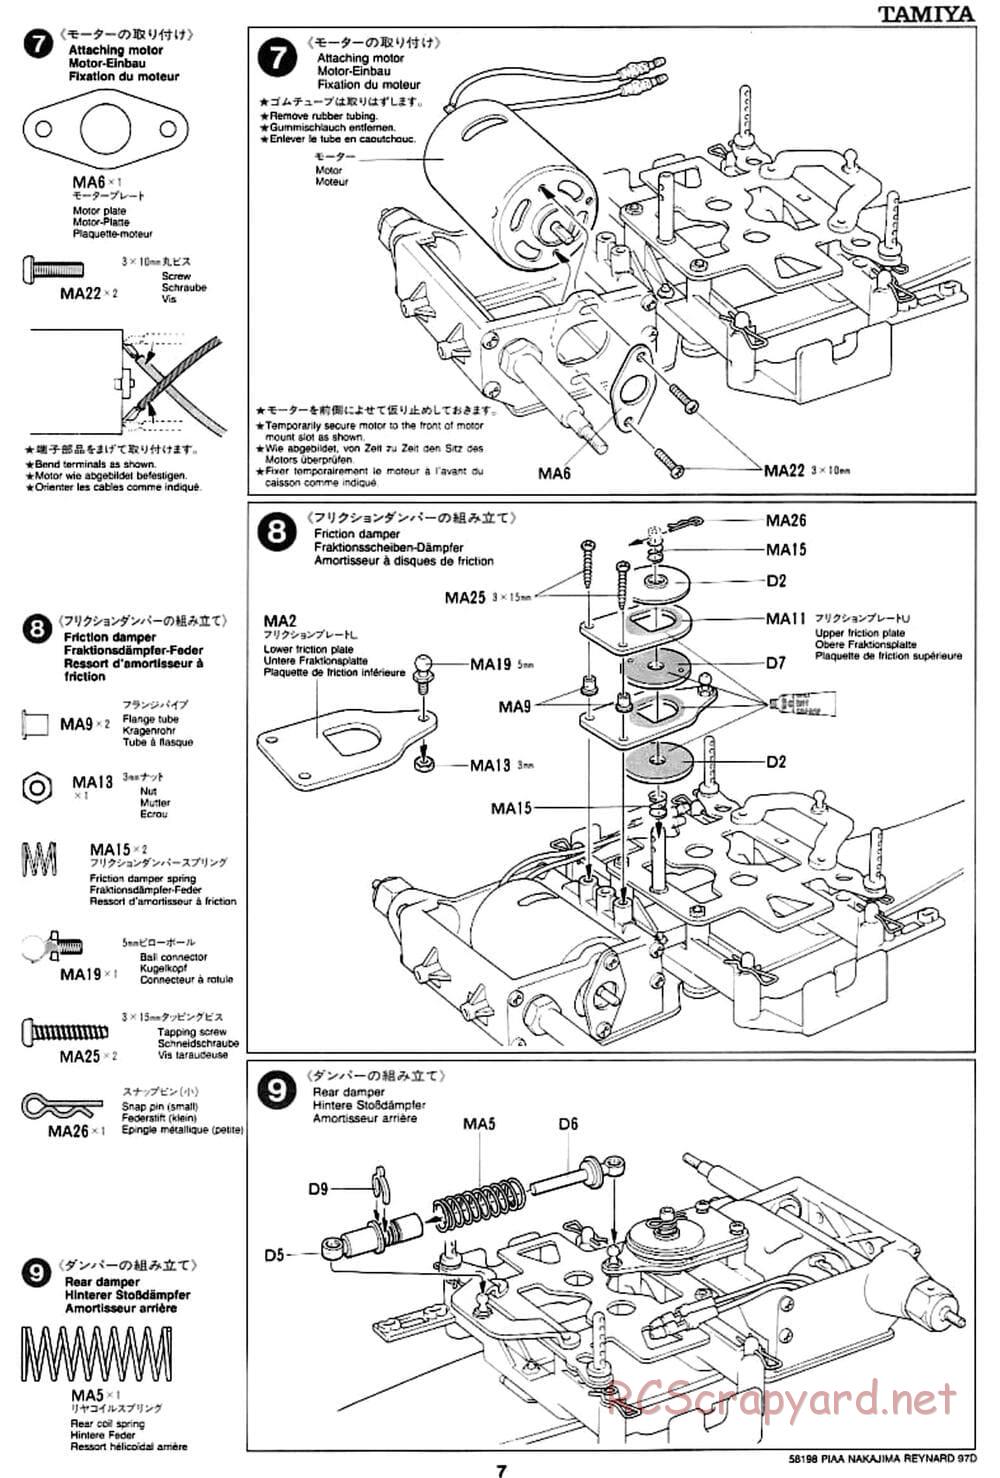 Tamiya - PIAA Nakajima Reynard 97D - F103 Chassis - Manuel - Page 7